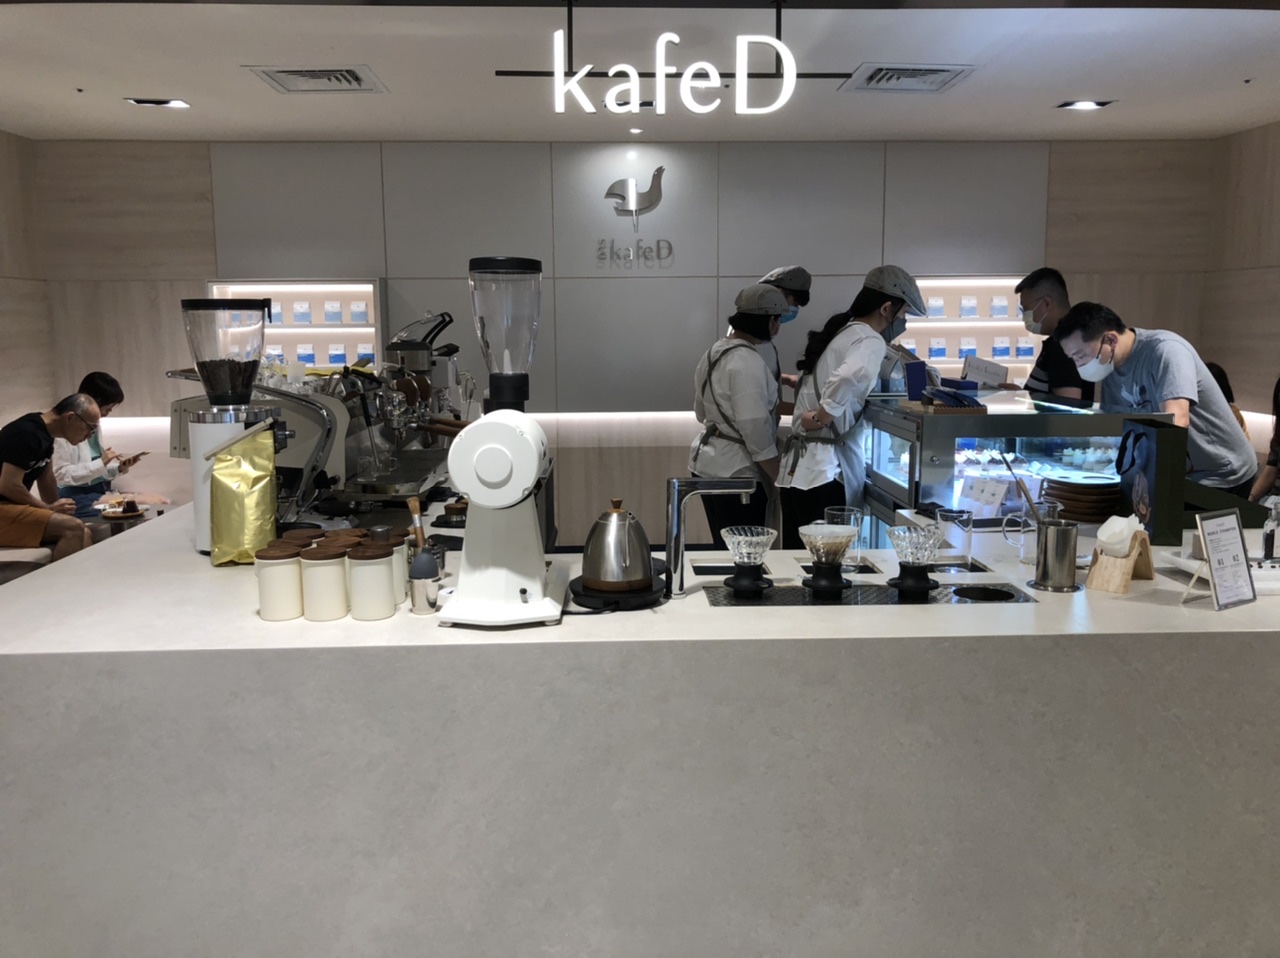 kafeD德式咖啡廳/咖啡滴/台北新光三越A8館/經典年輪蛋糕